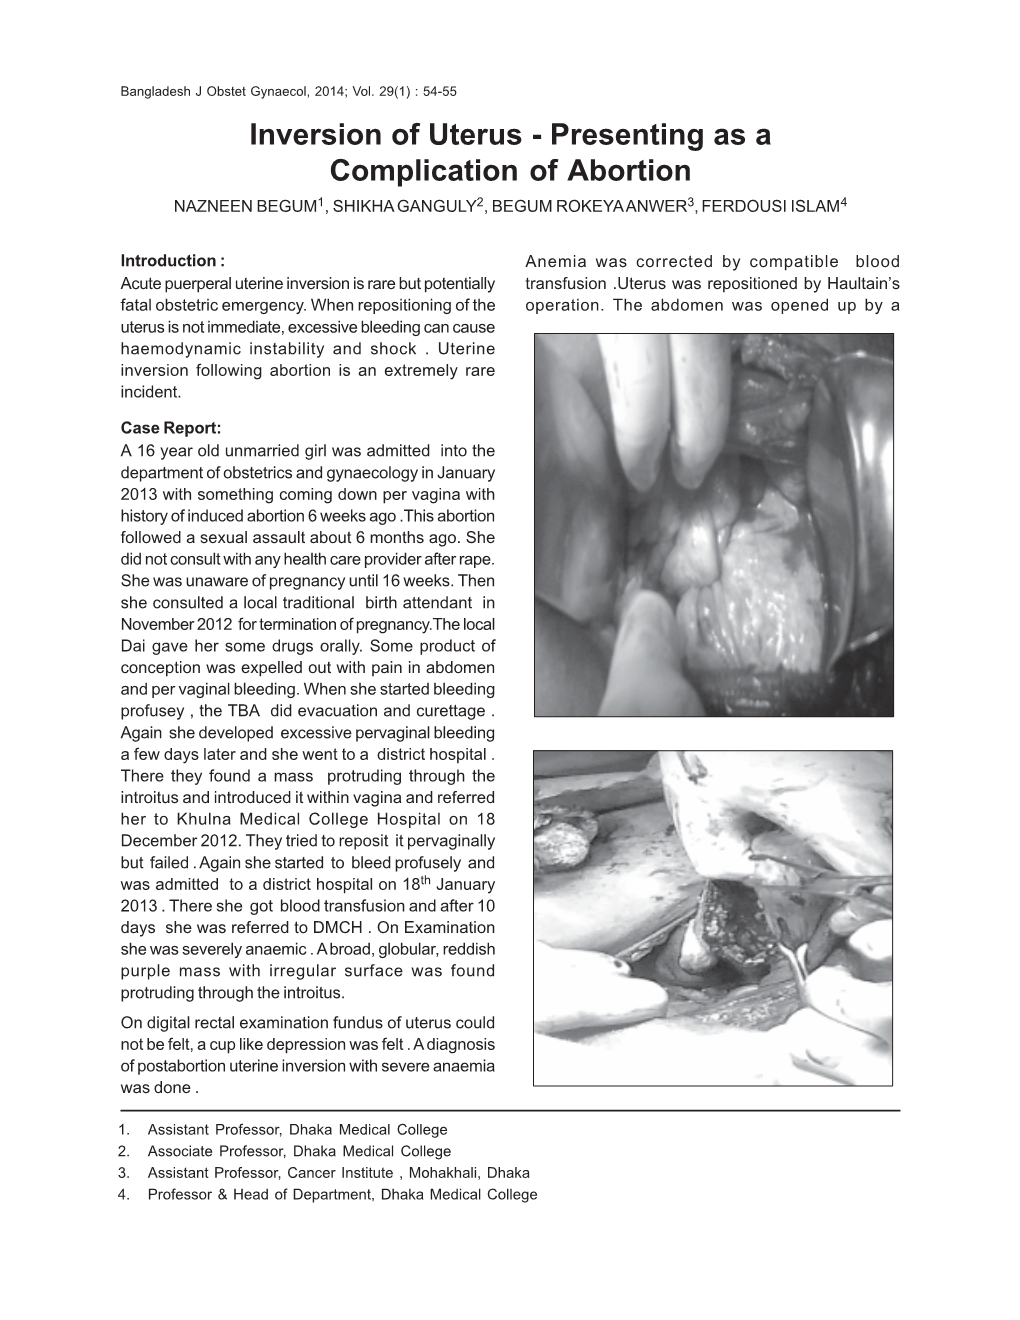 Inversion of Uterus - Presenting As a Complication of Abortion NAZNEEN BEGUM1, SHIKHA GANGULY2, BEGUM ROKEYA ANWER3, FERDOUSI ISLAM4